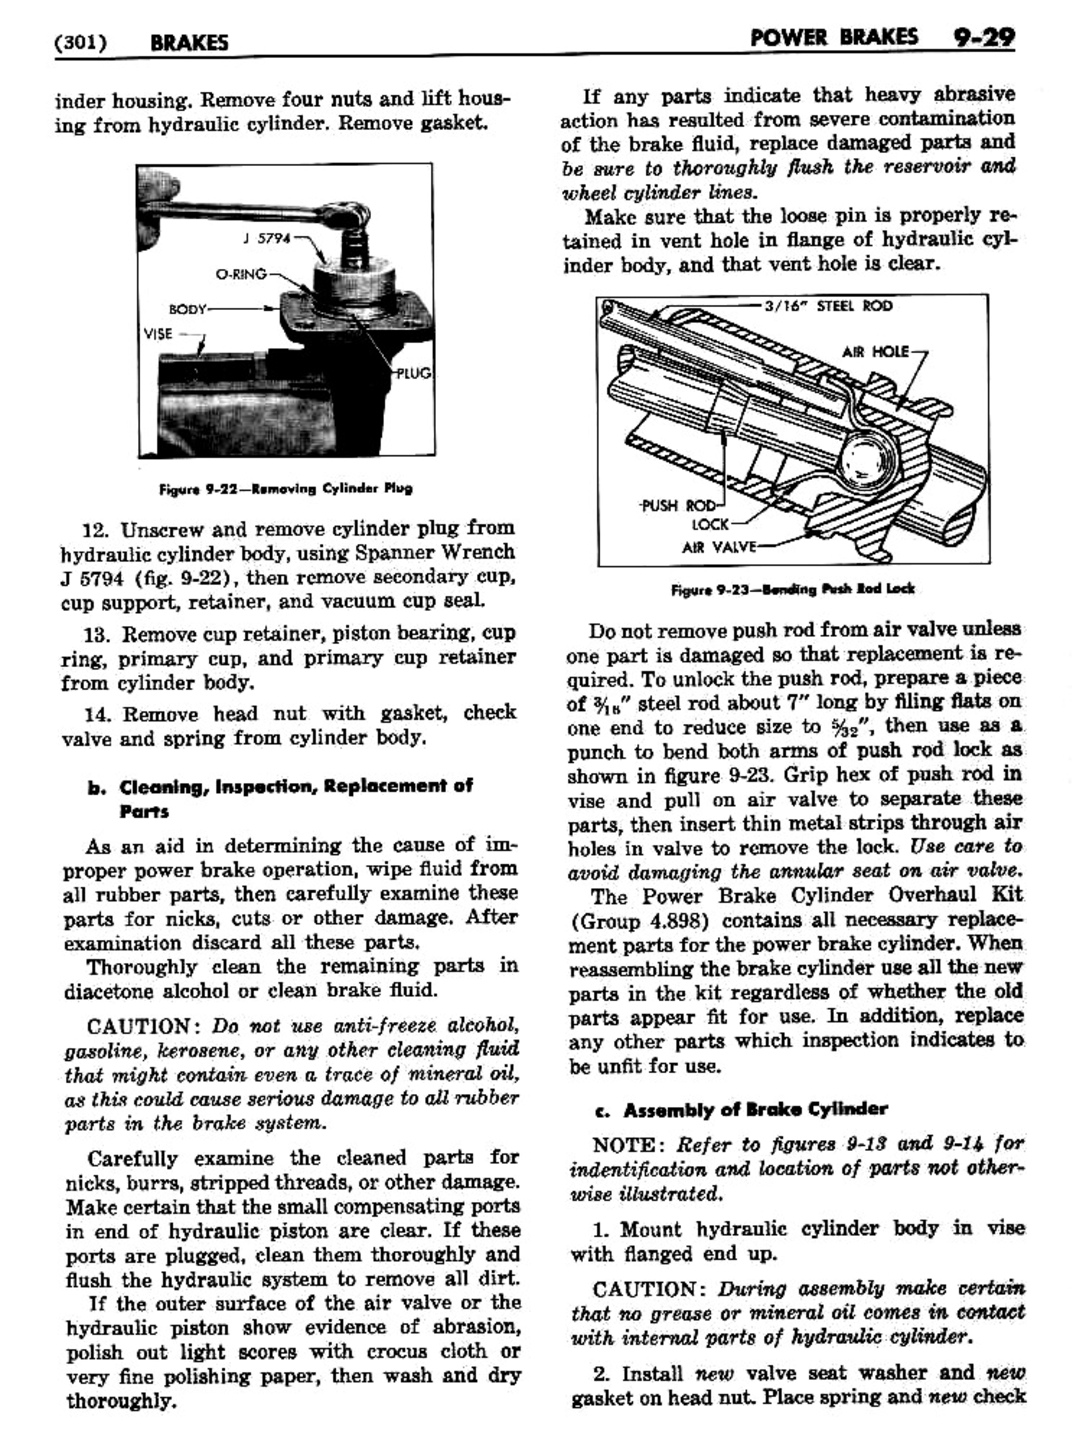 n_10 1955 Buick Shop Manual - Brakes-029-029.jpg